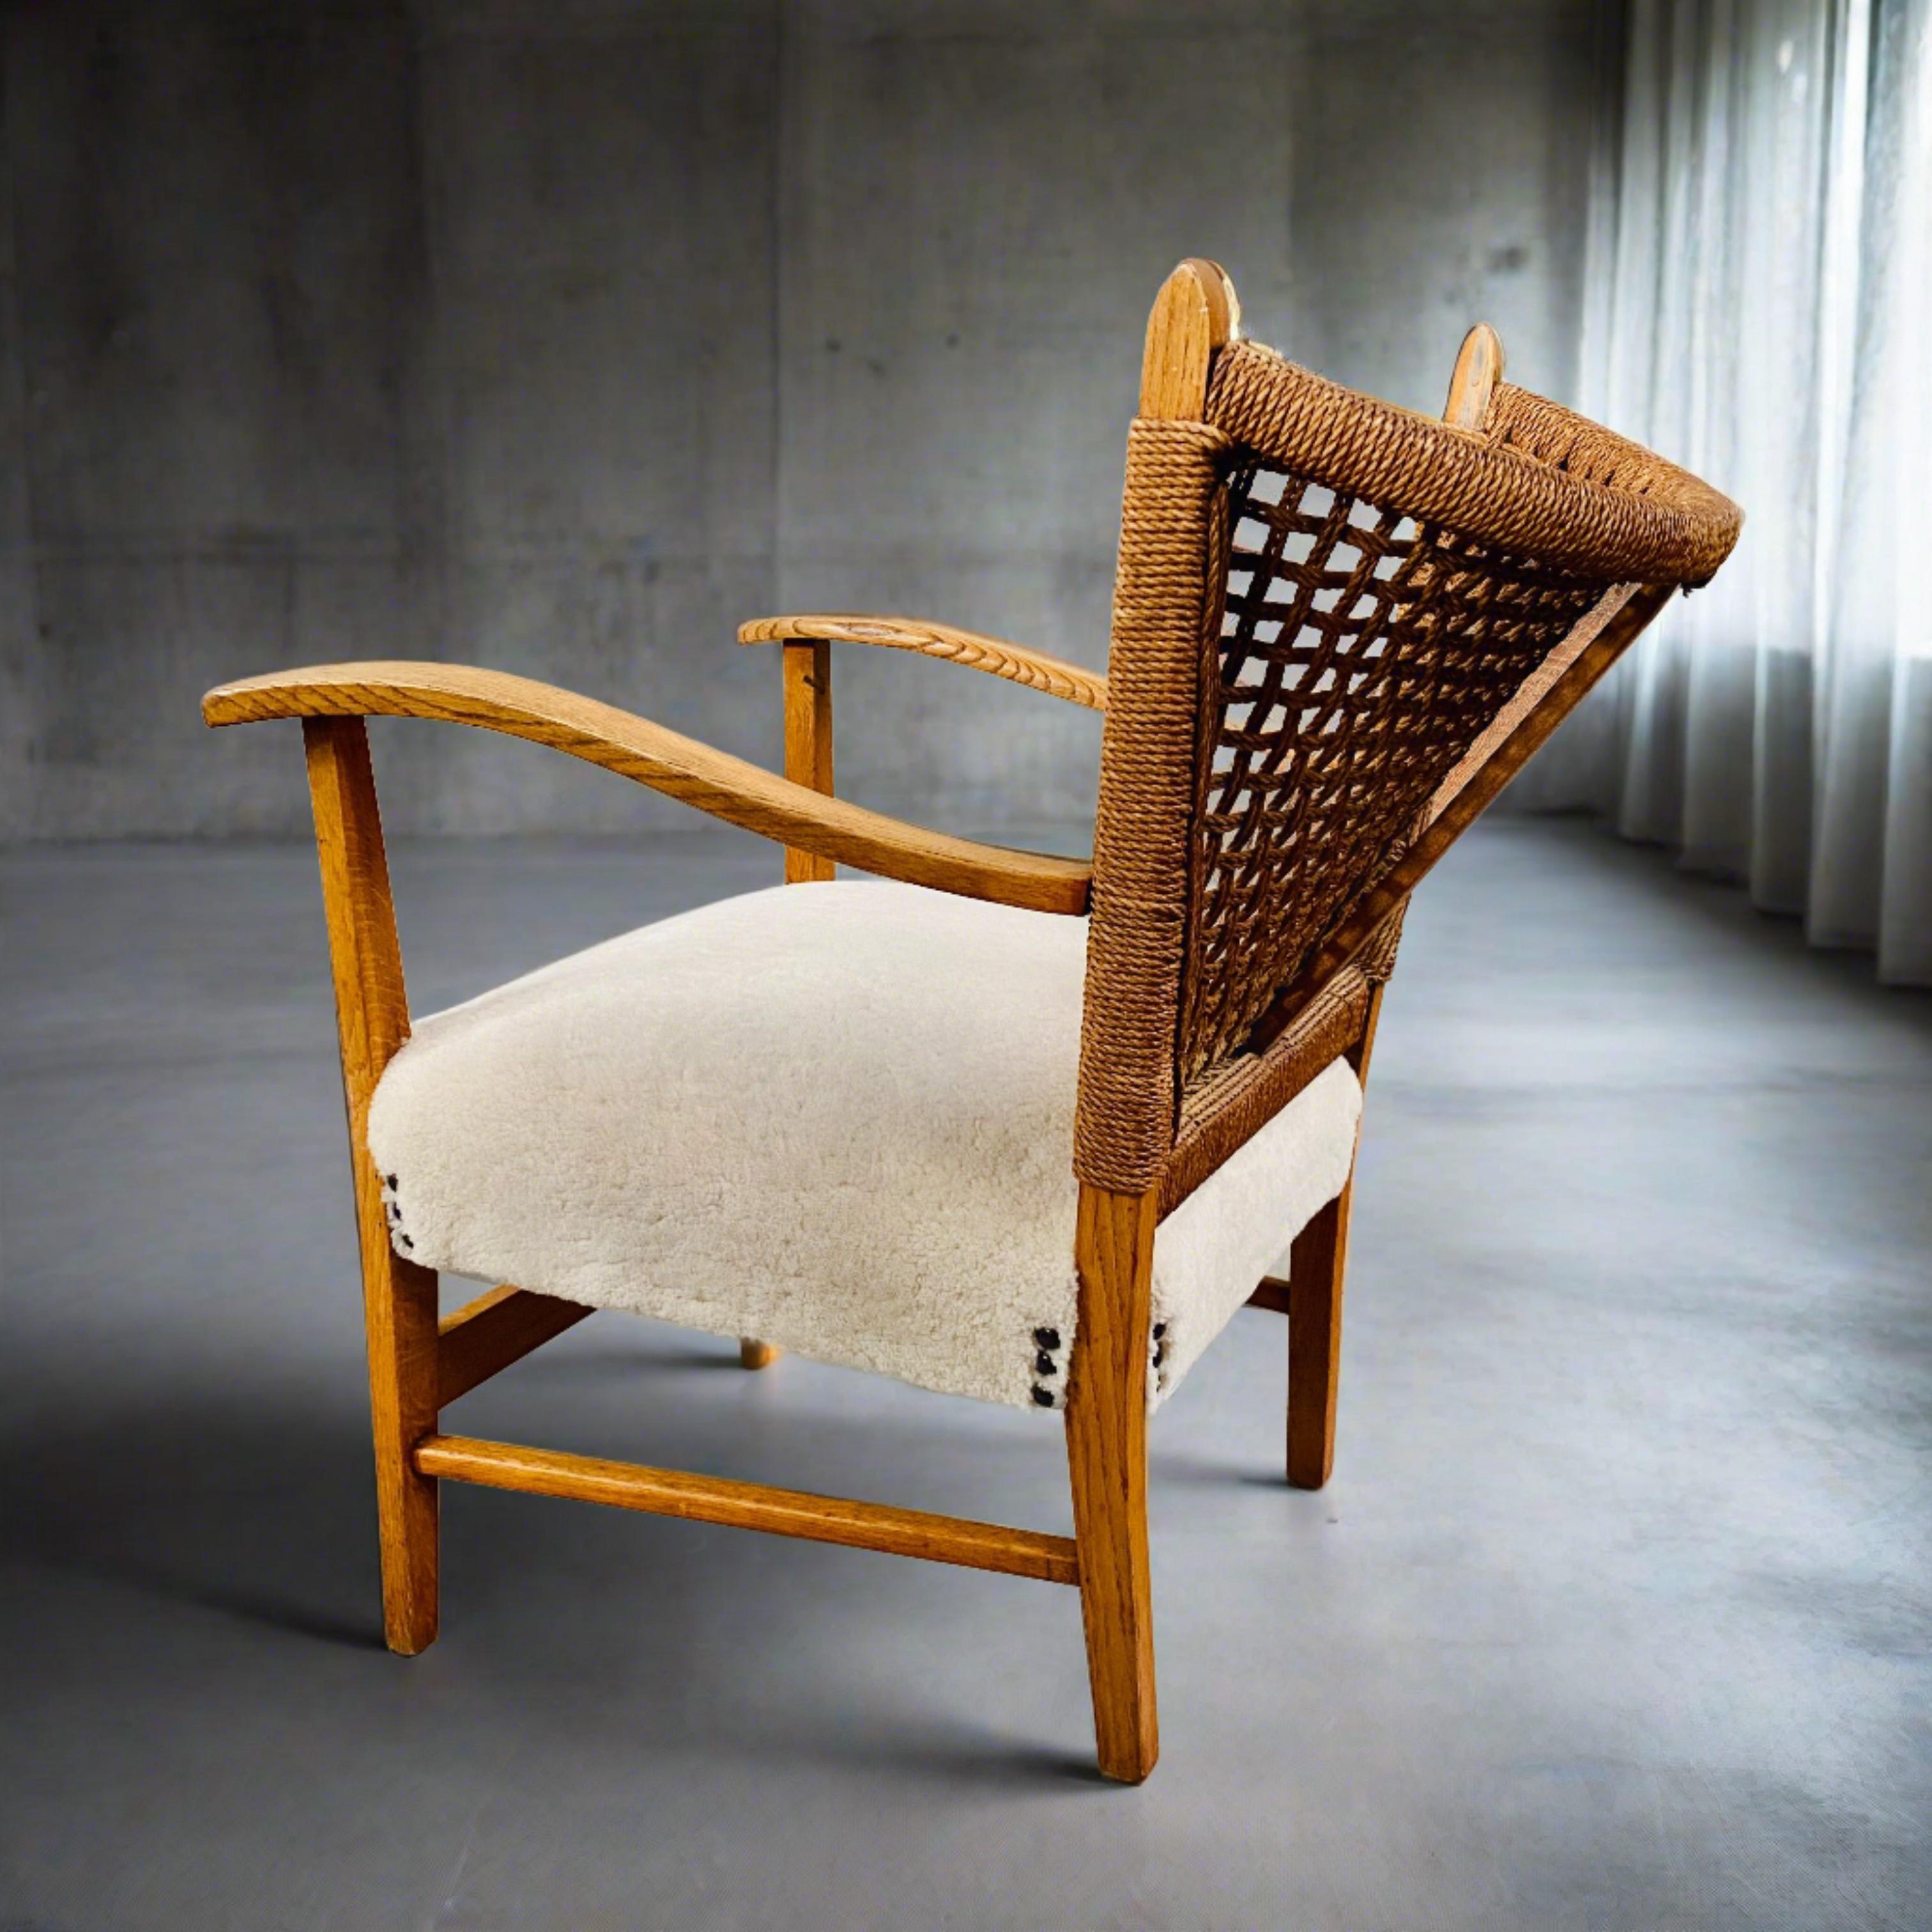 Rustic Rope, Oak and Sheepskin Arm Chair by Bas Van Pelt, Netherlands 1940 For Sale